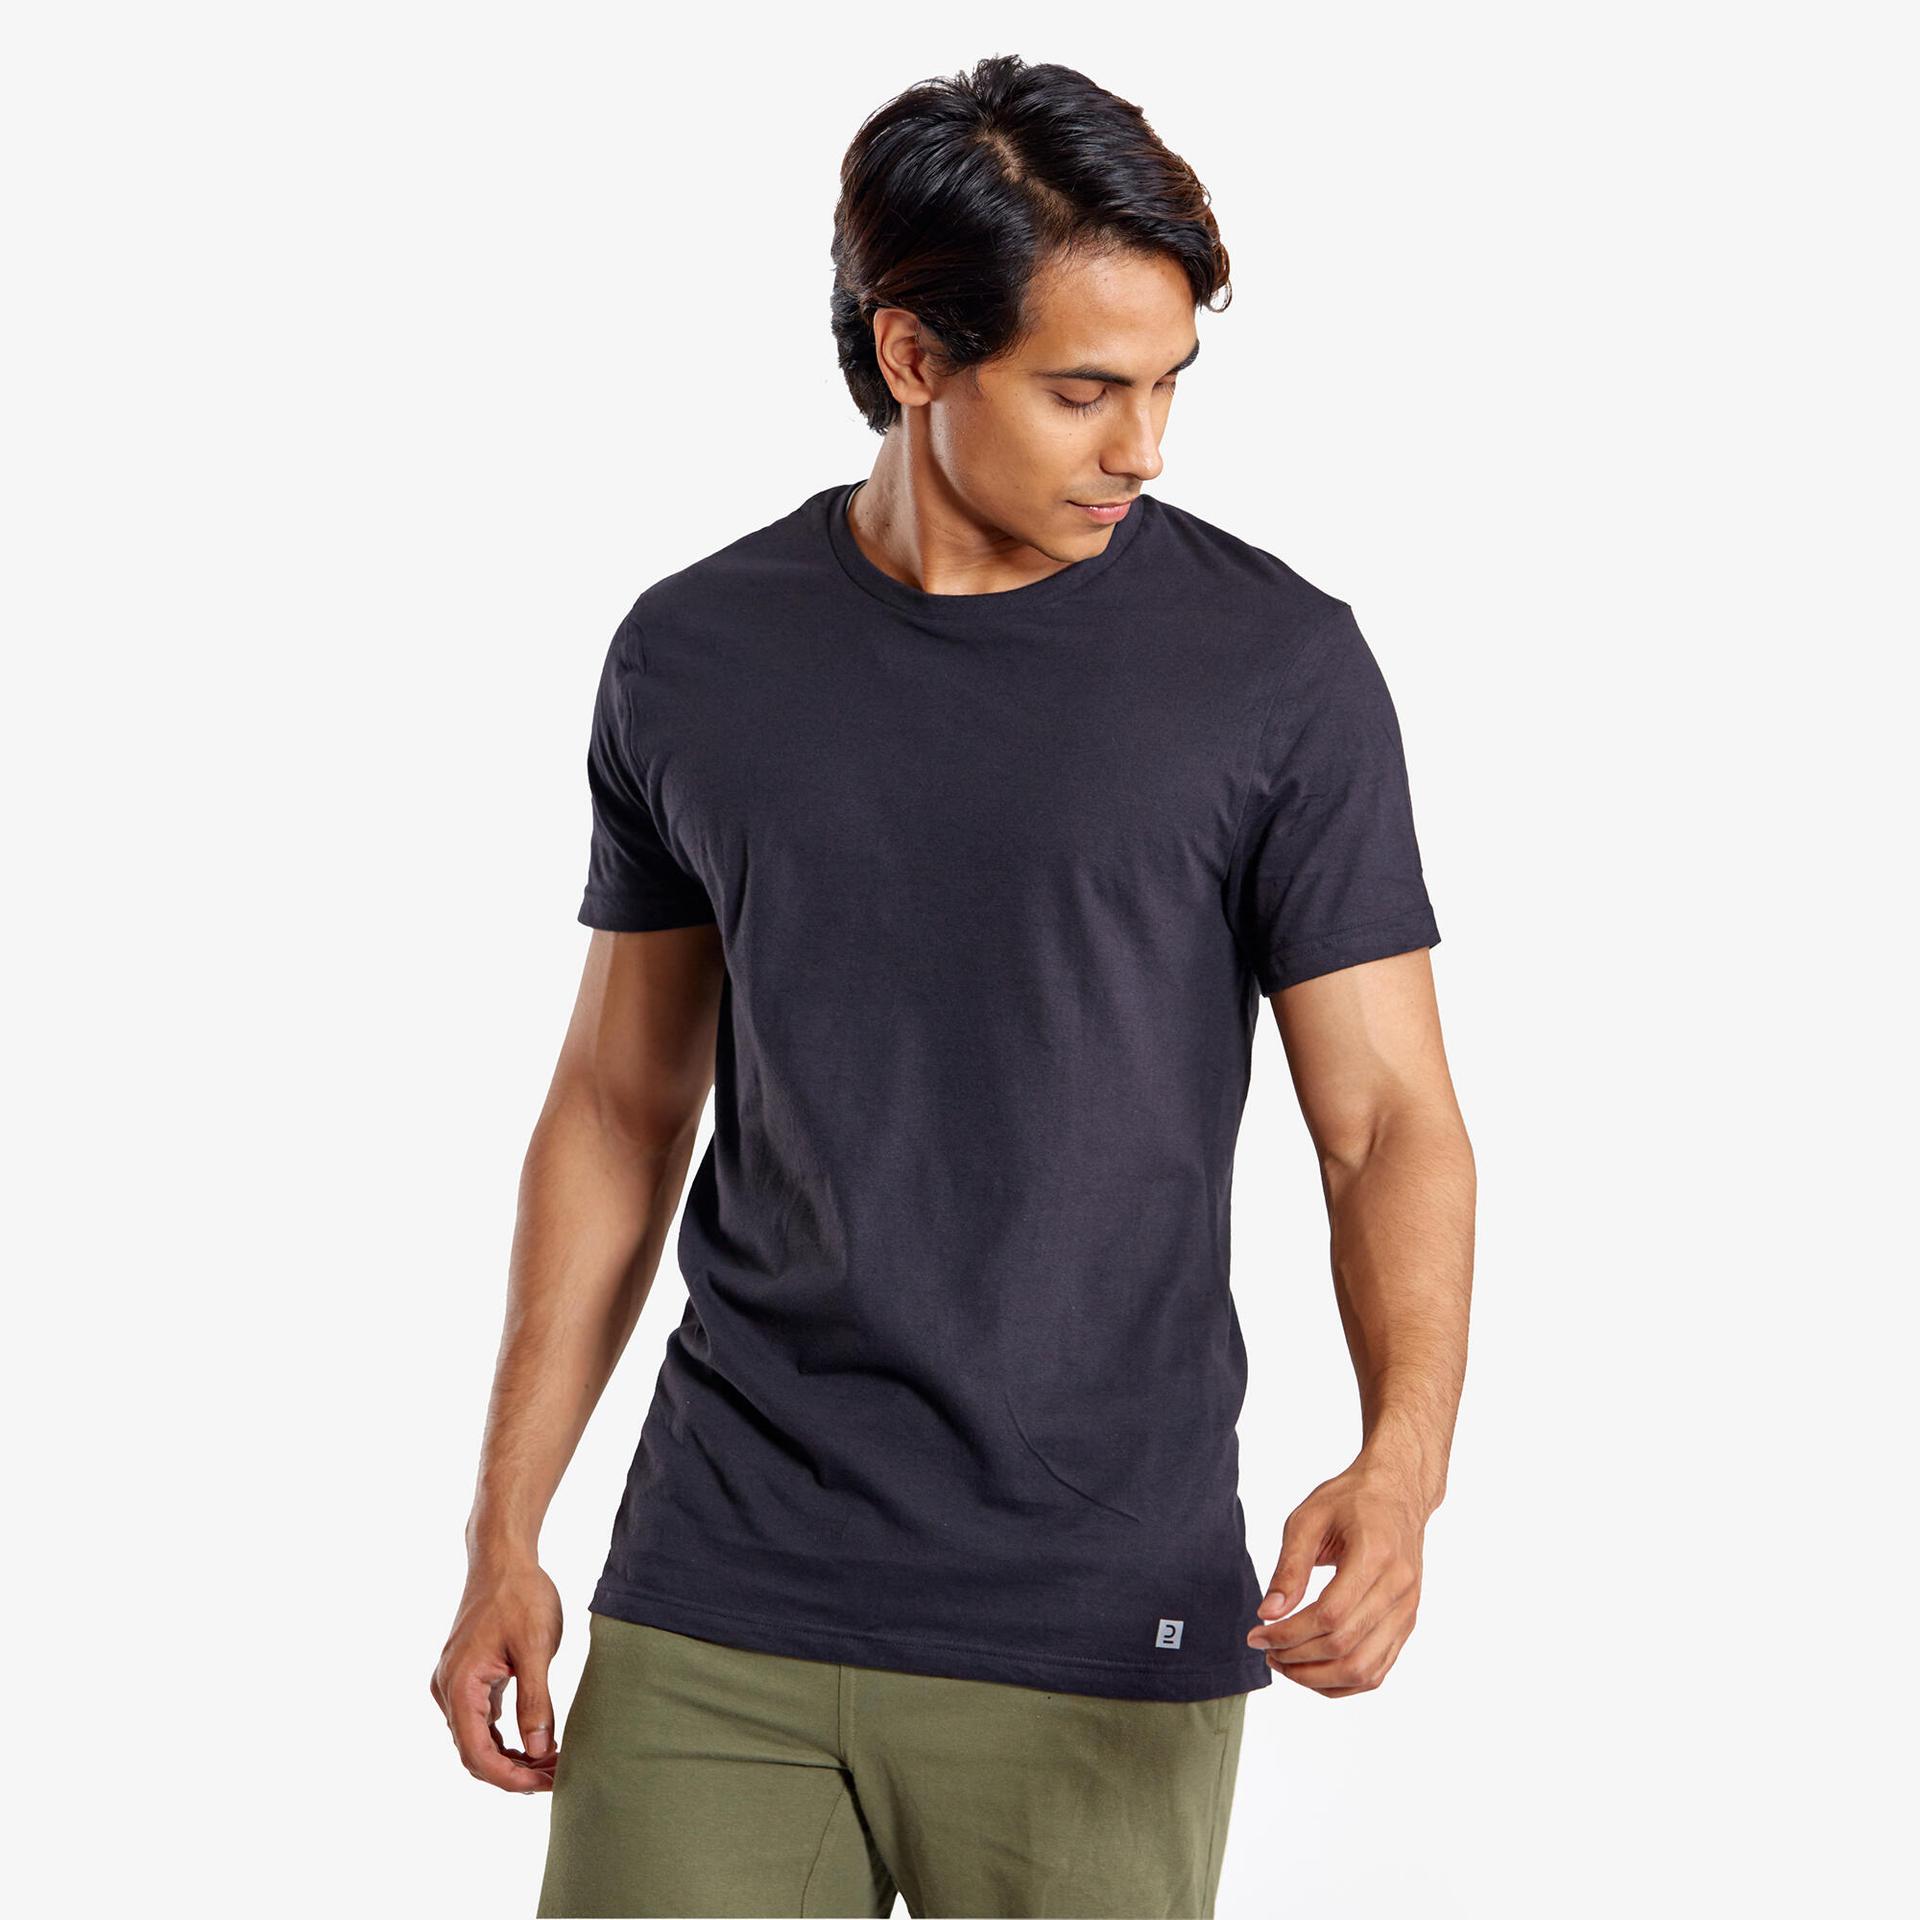 men's cotton gym t-shirt regular fit sportee 100 - black